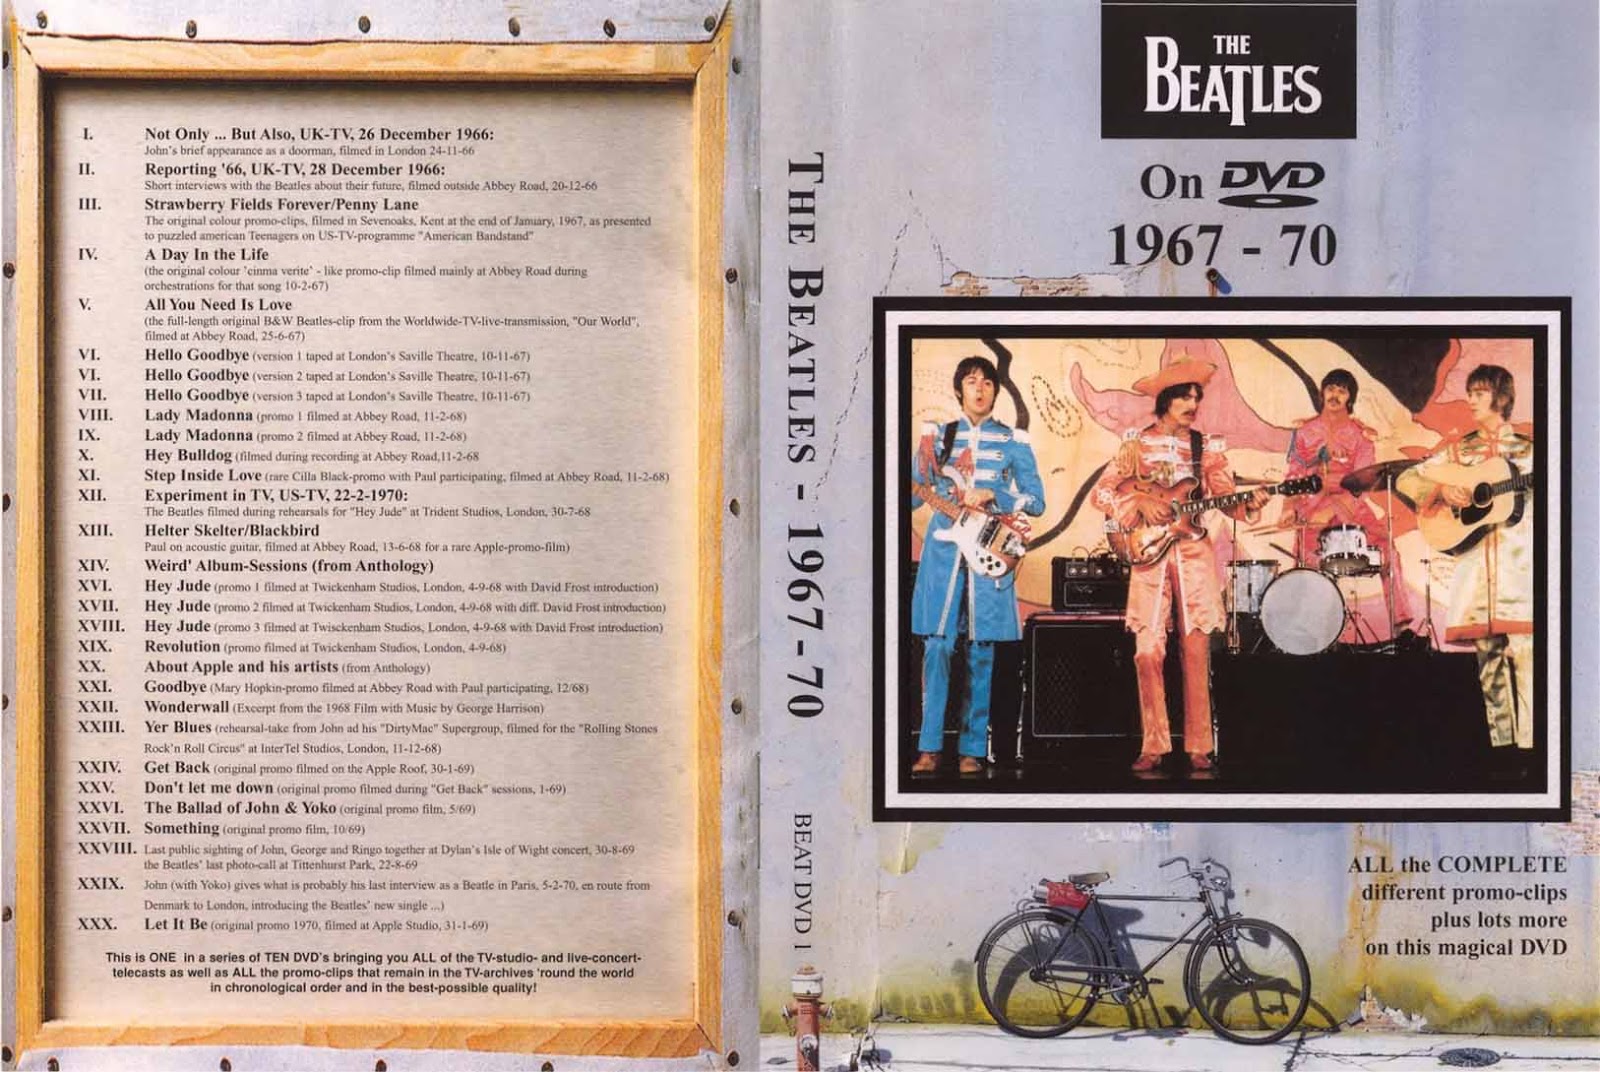 Completely different. Битлз 1967-1970. Битлз DVD. The Beatles 1970 в студии.